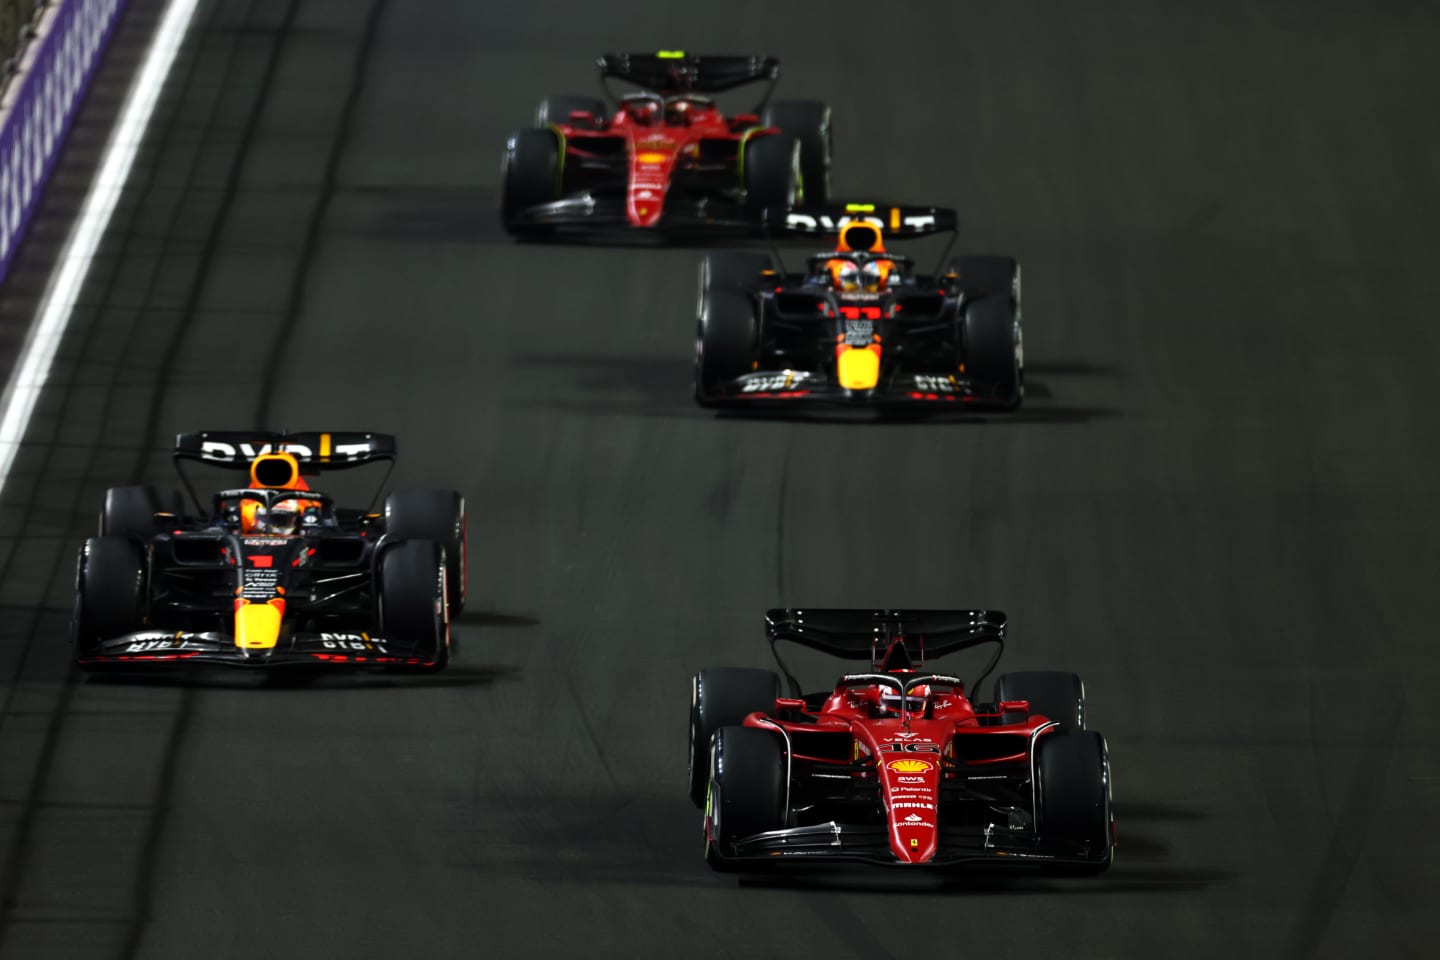 JEDDAH, SAUDI ARABIA - MARCH 27: Charles Leclerc of Monaco driving (16) the Ferrari F1-75 leads Max